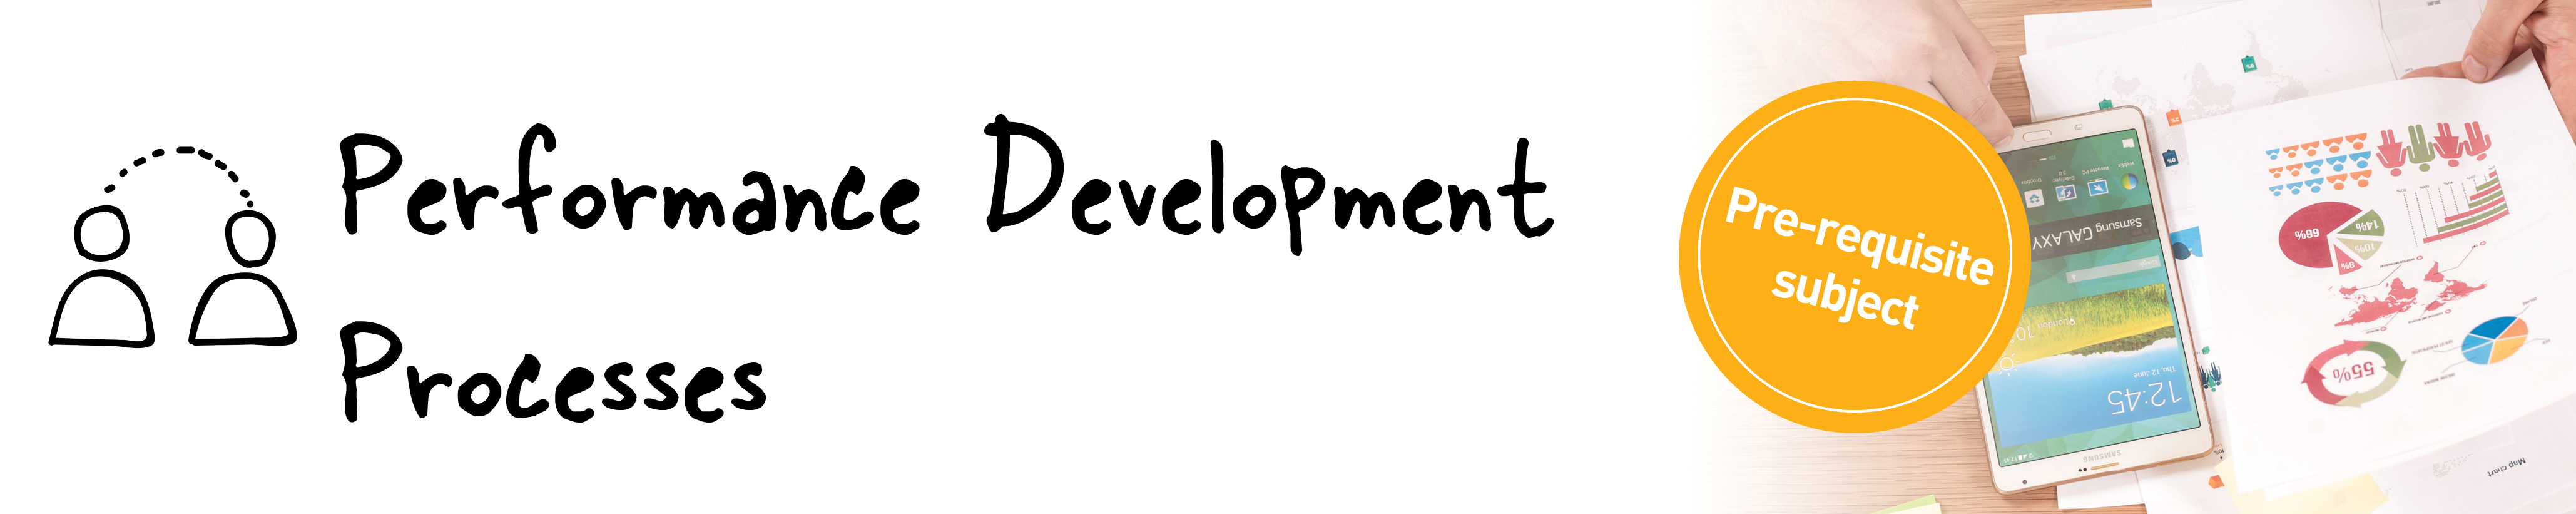 Performance Development Processes